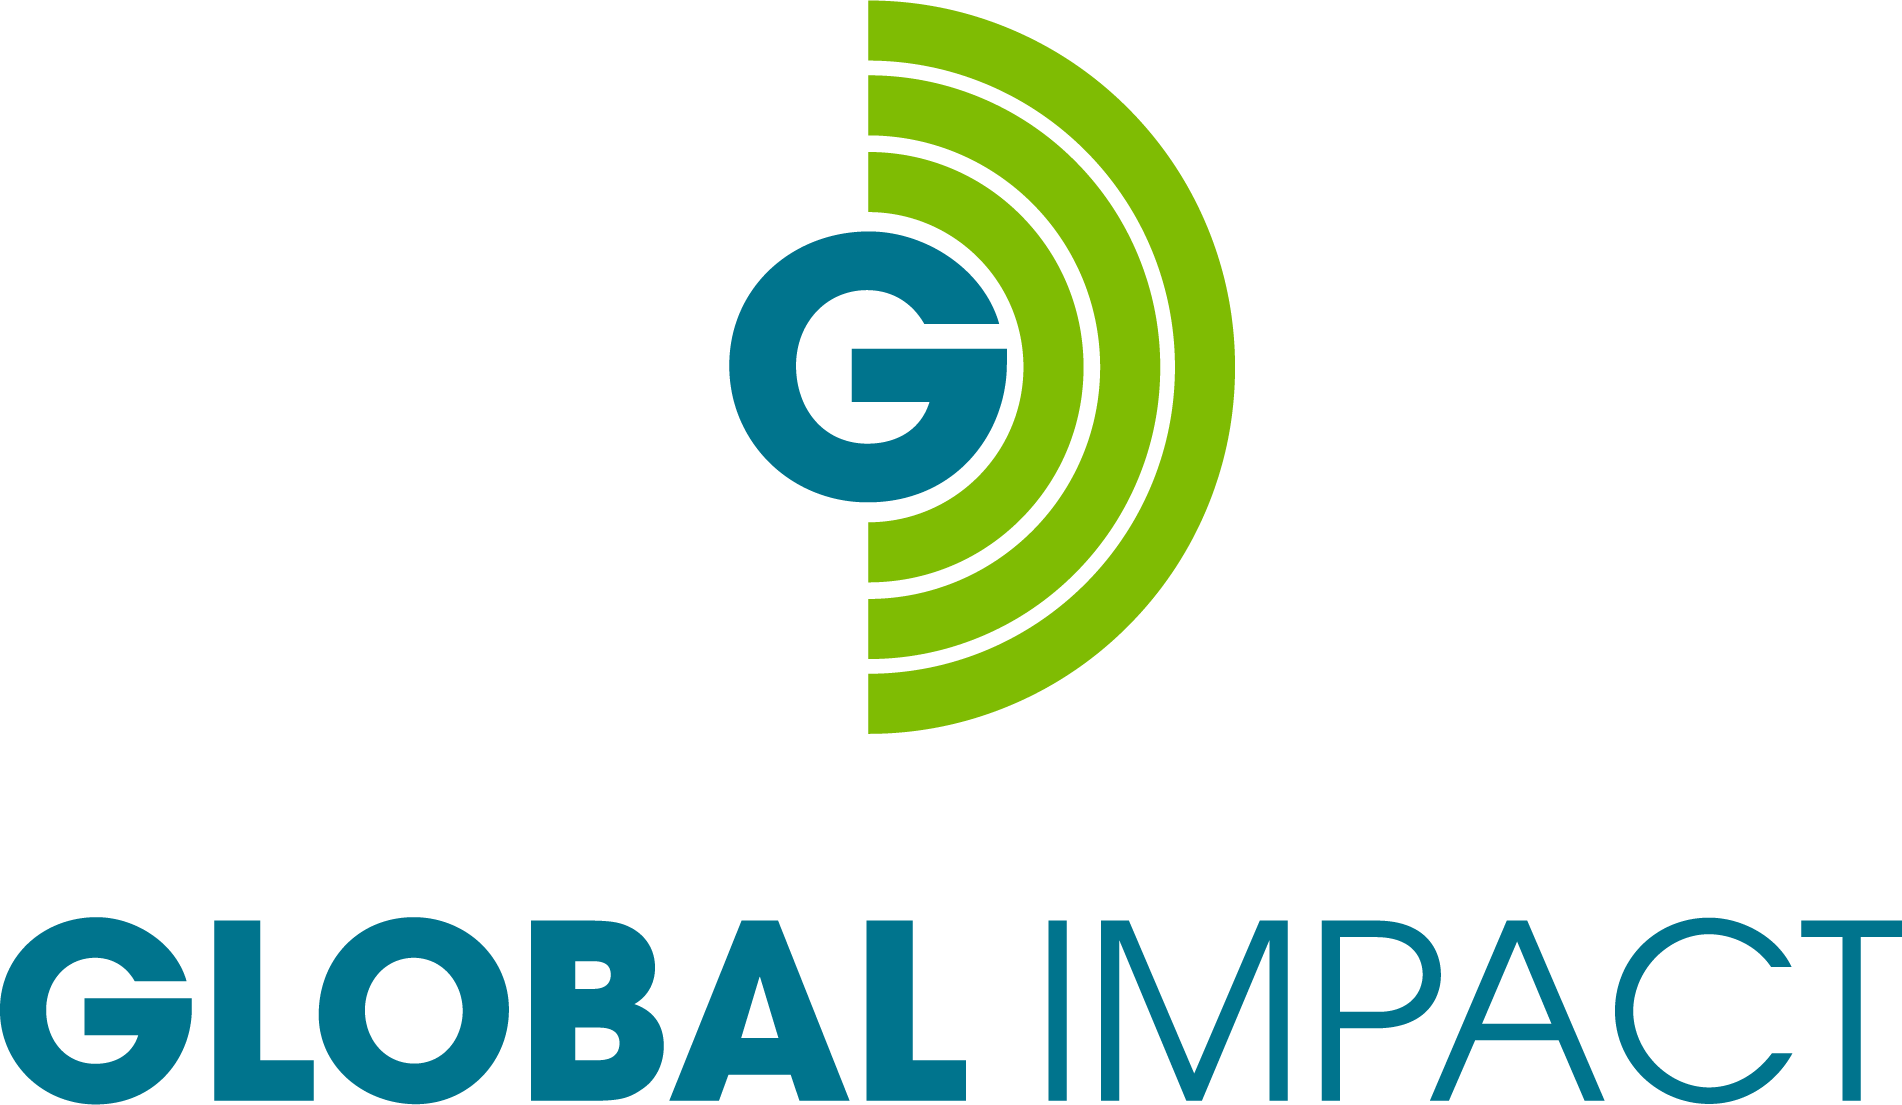 Global Impact logo